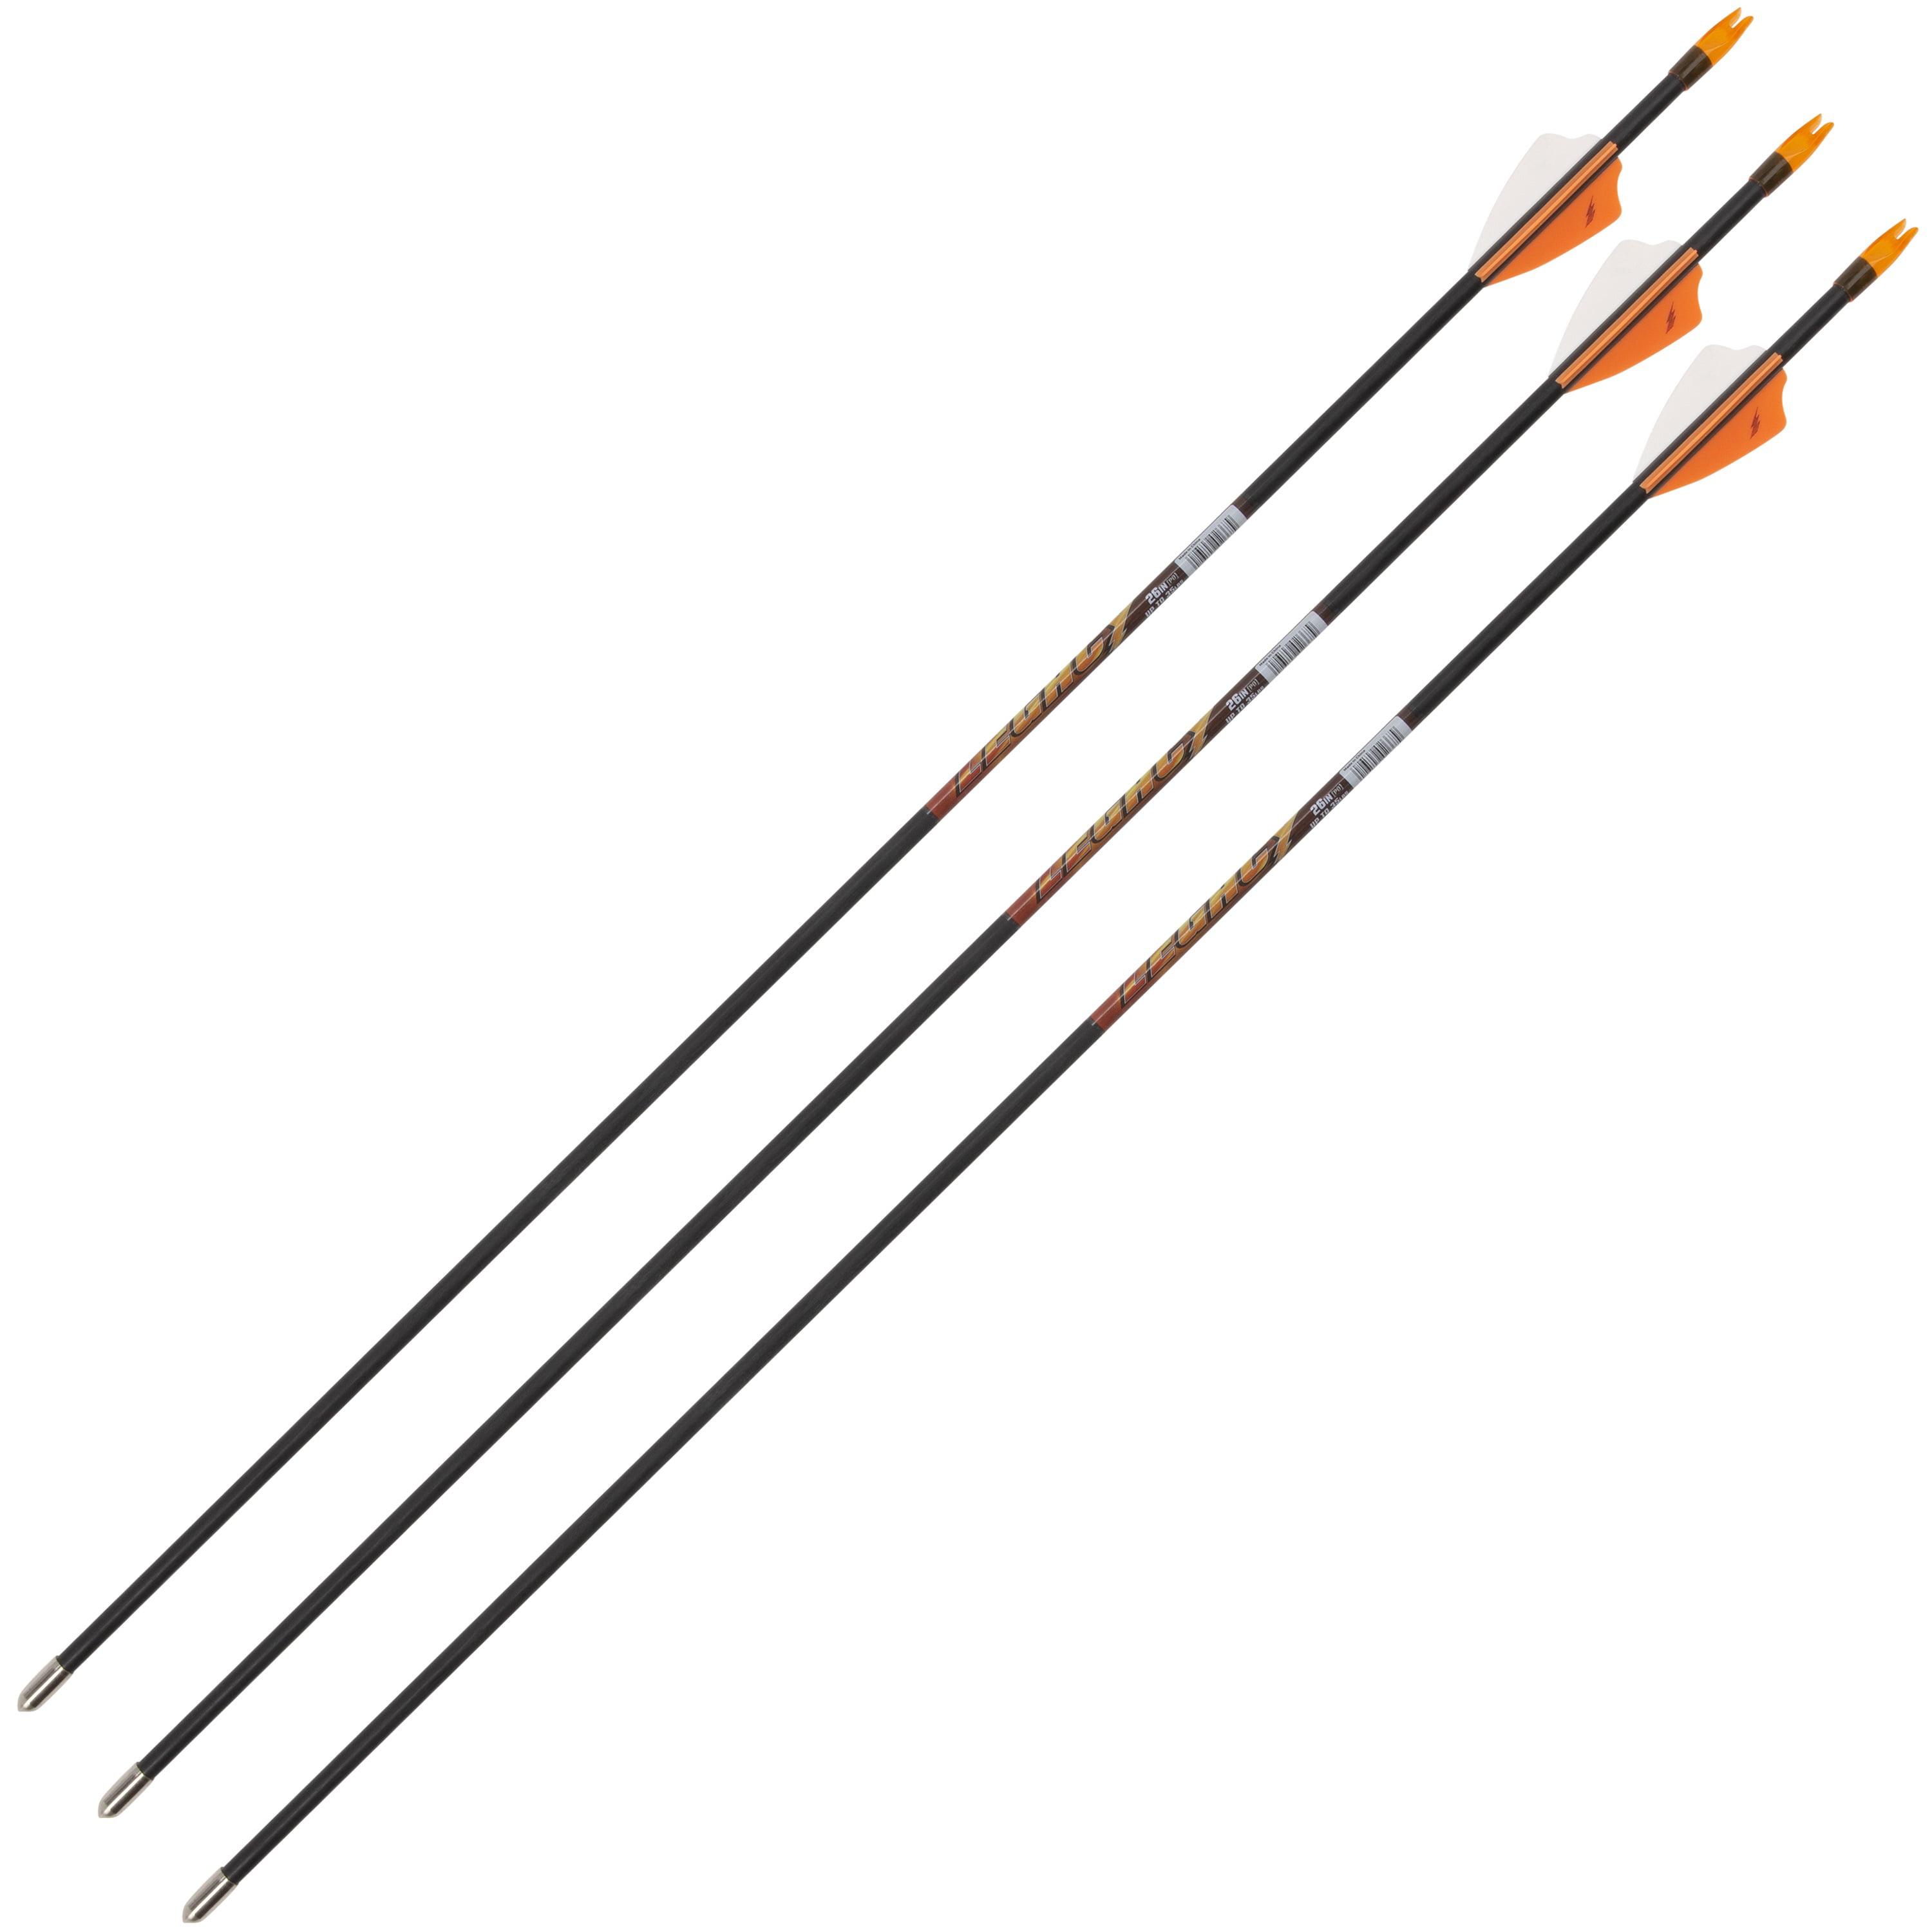 NEW Allen Kryptos 29" Arrows 50-70lbs Lot of 6 Archery w Vanes Nocks Inserts 